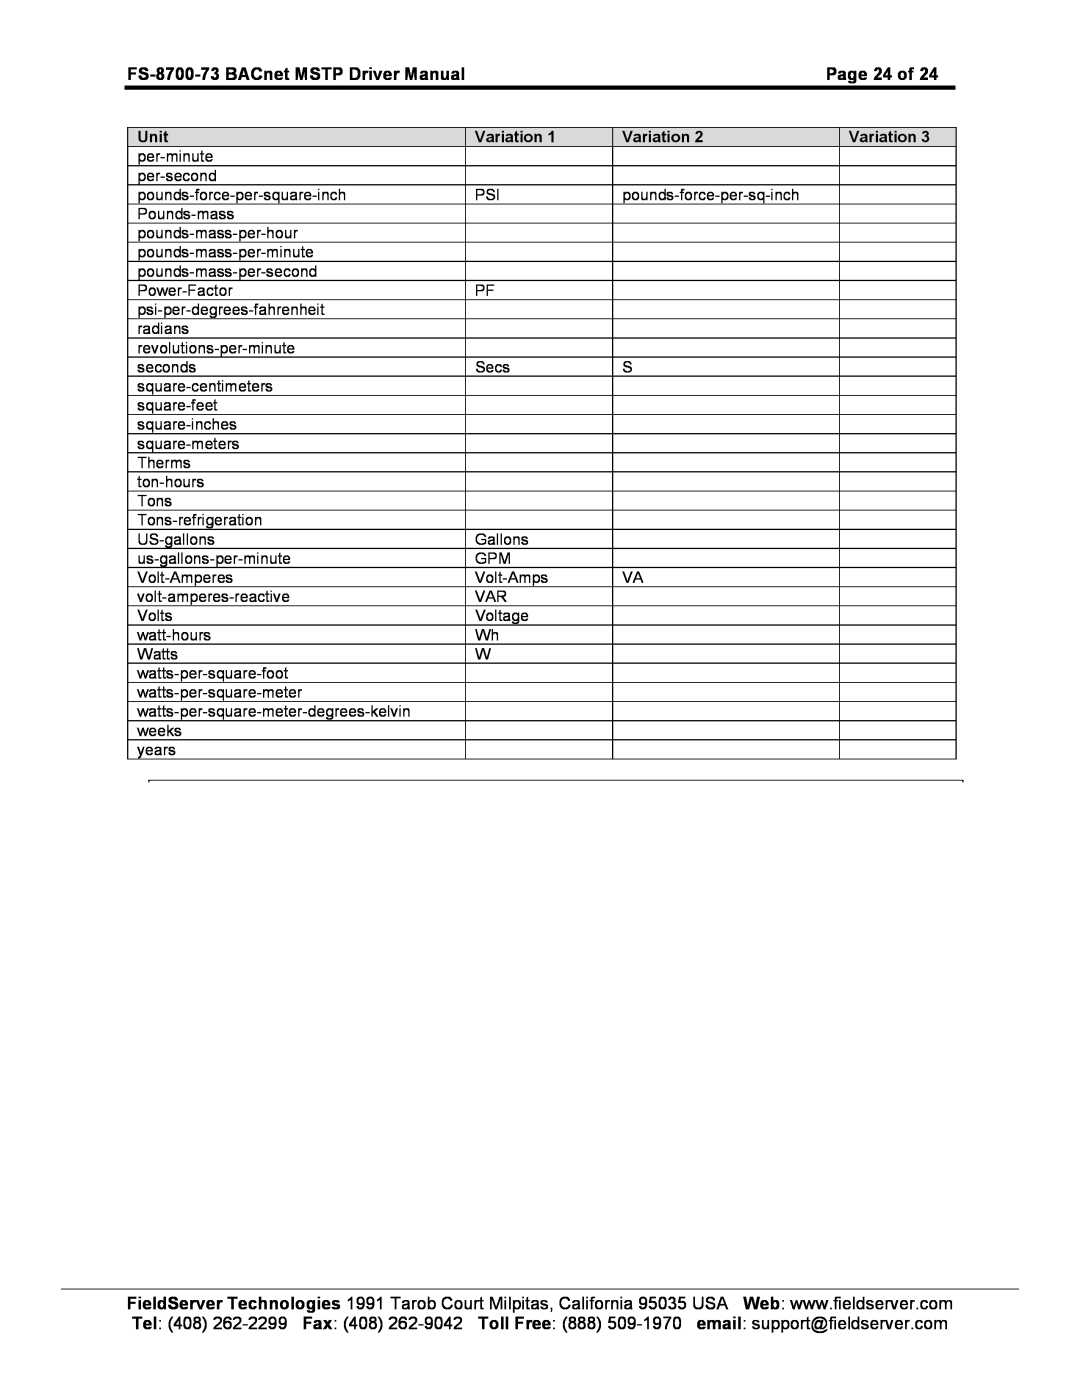 FieldServer instruction manual FS-8700-73 BACnet MSTP Driver Manual, Page 24 of 